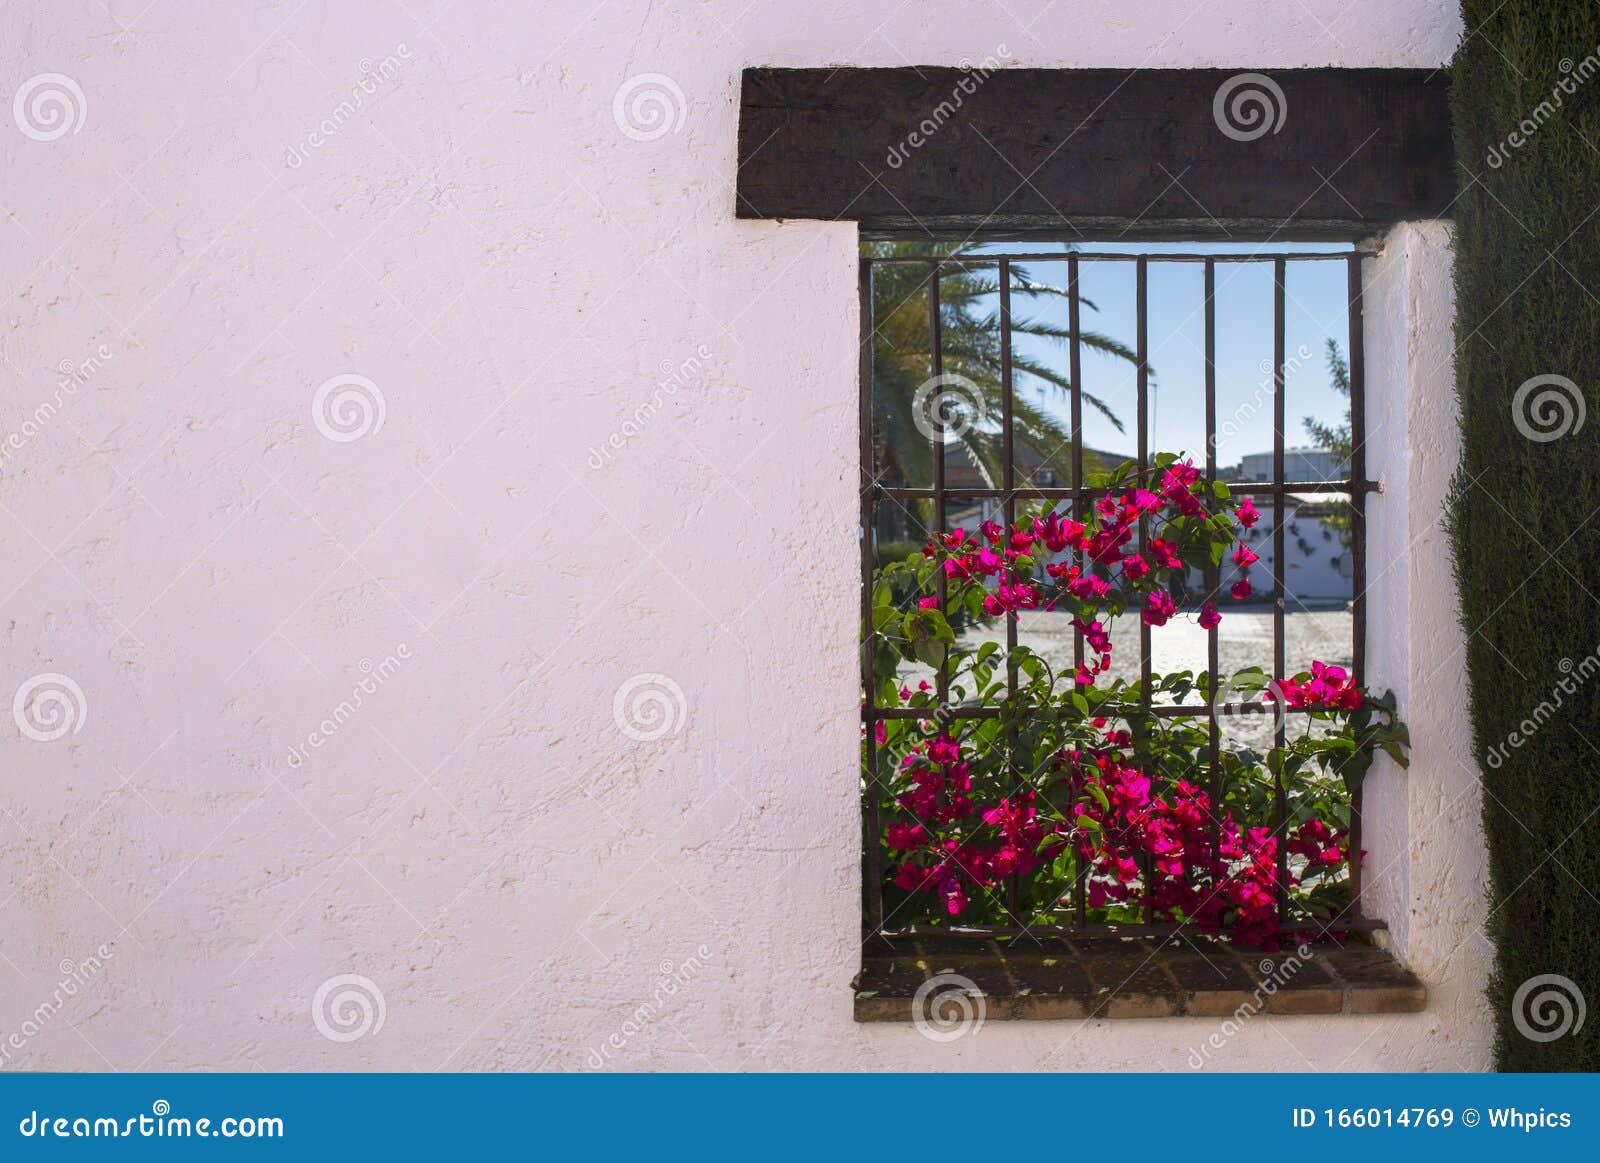 fuente palmera whitewashed walls and windows full of flowers, cordoba, spain